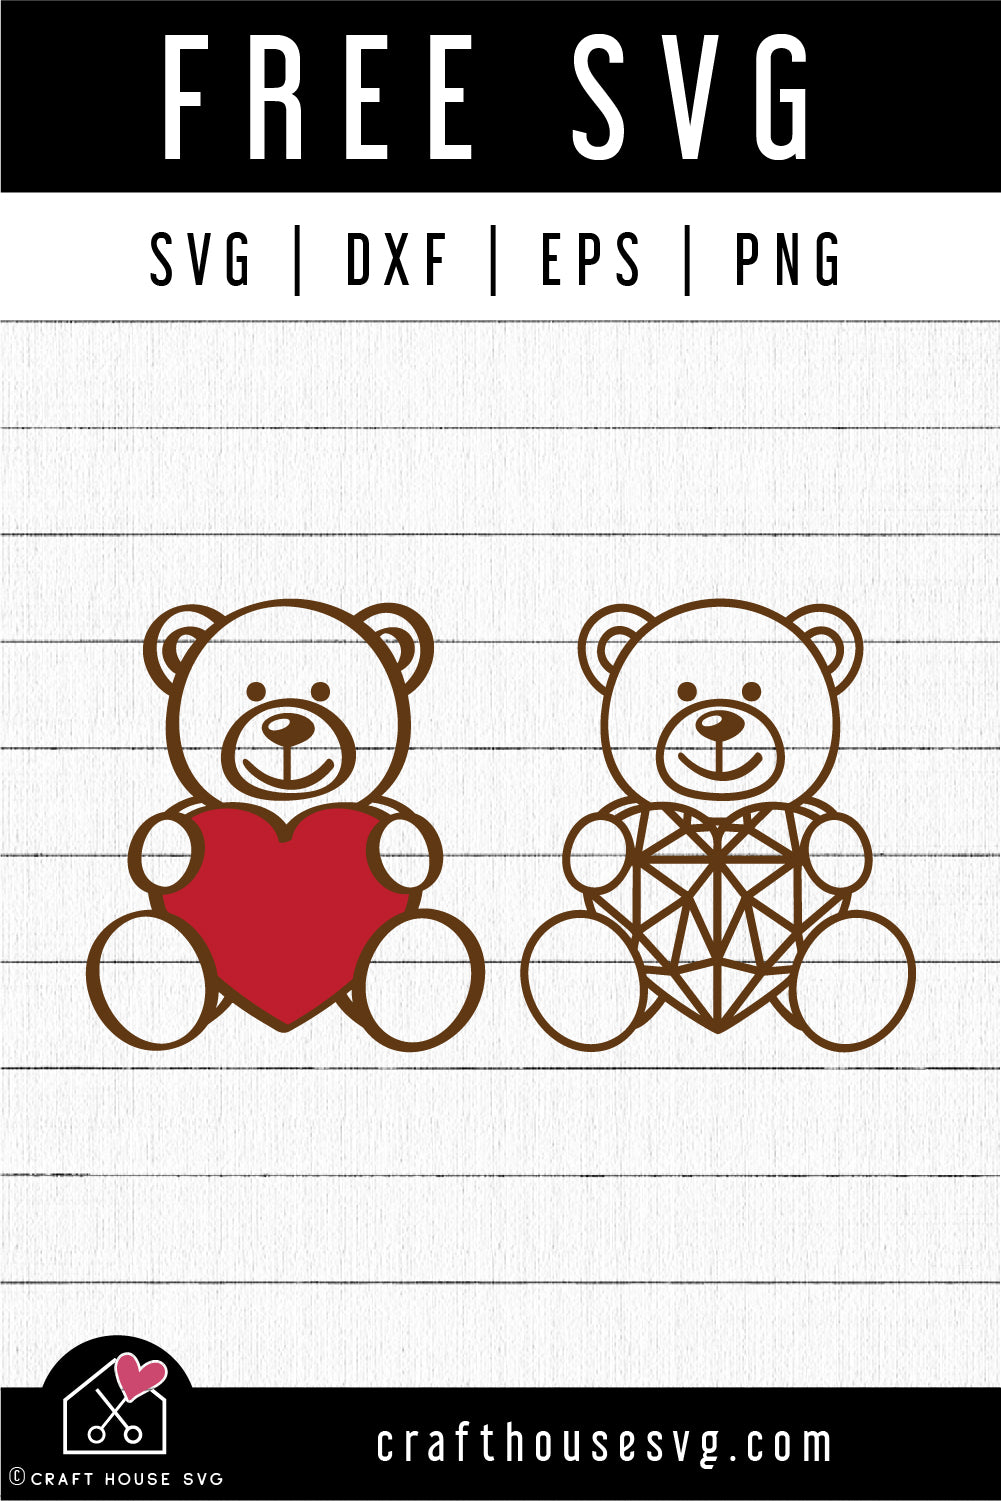 Teddy Bear Heart SVG File - Better Life Blog